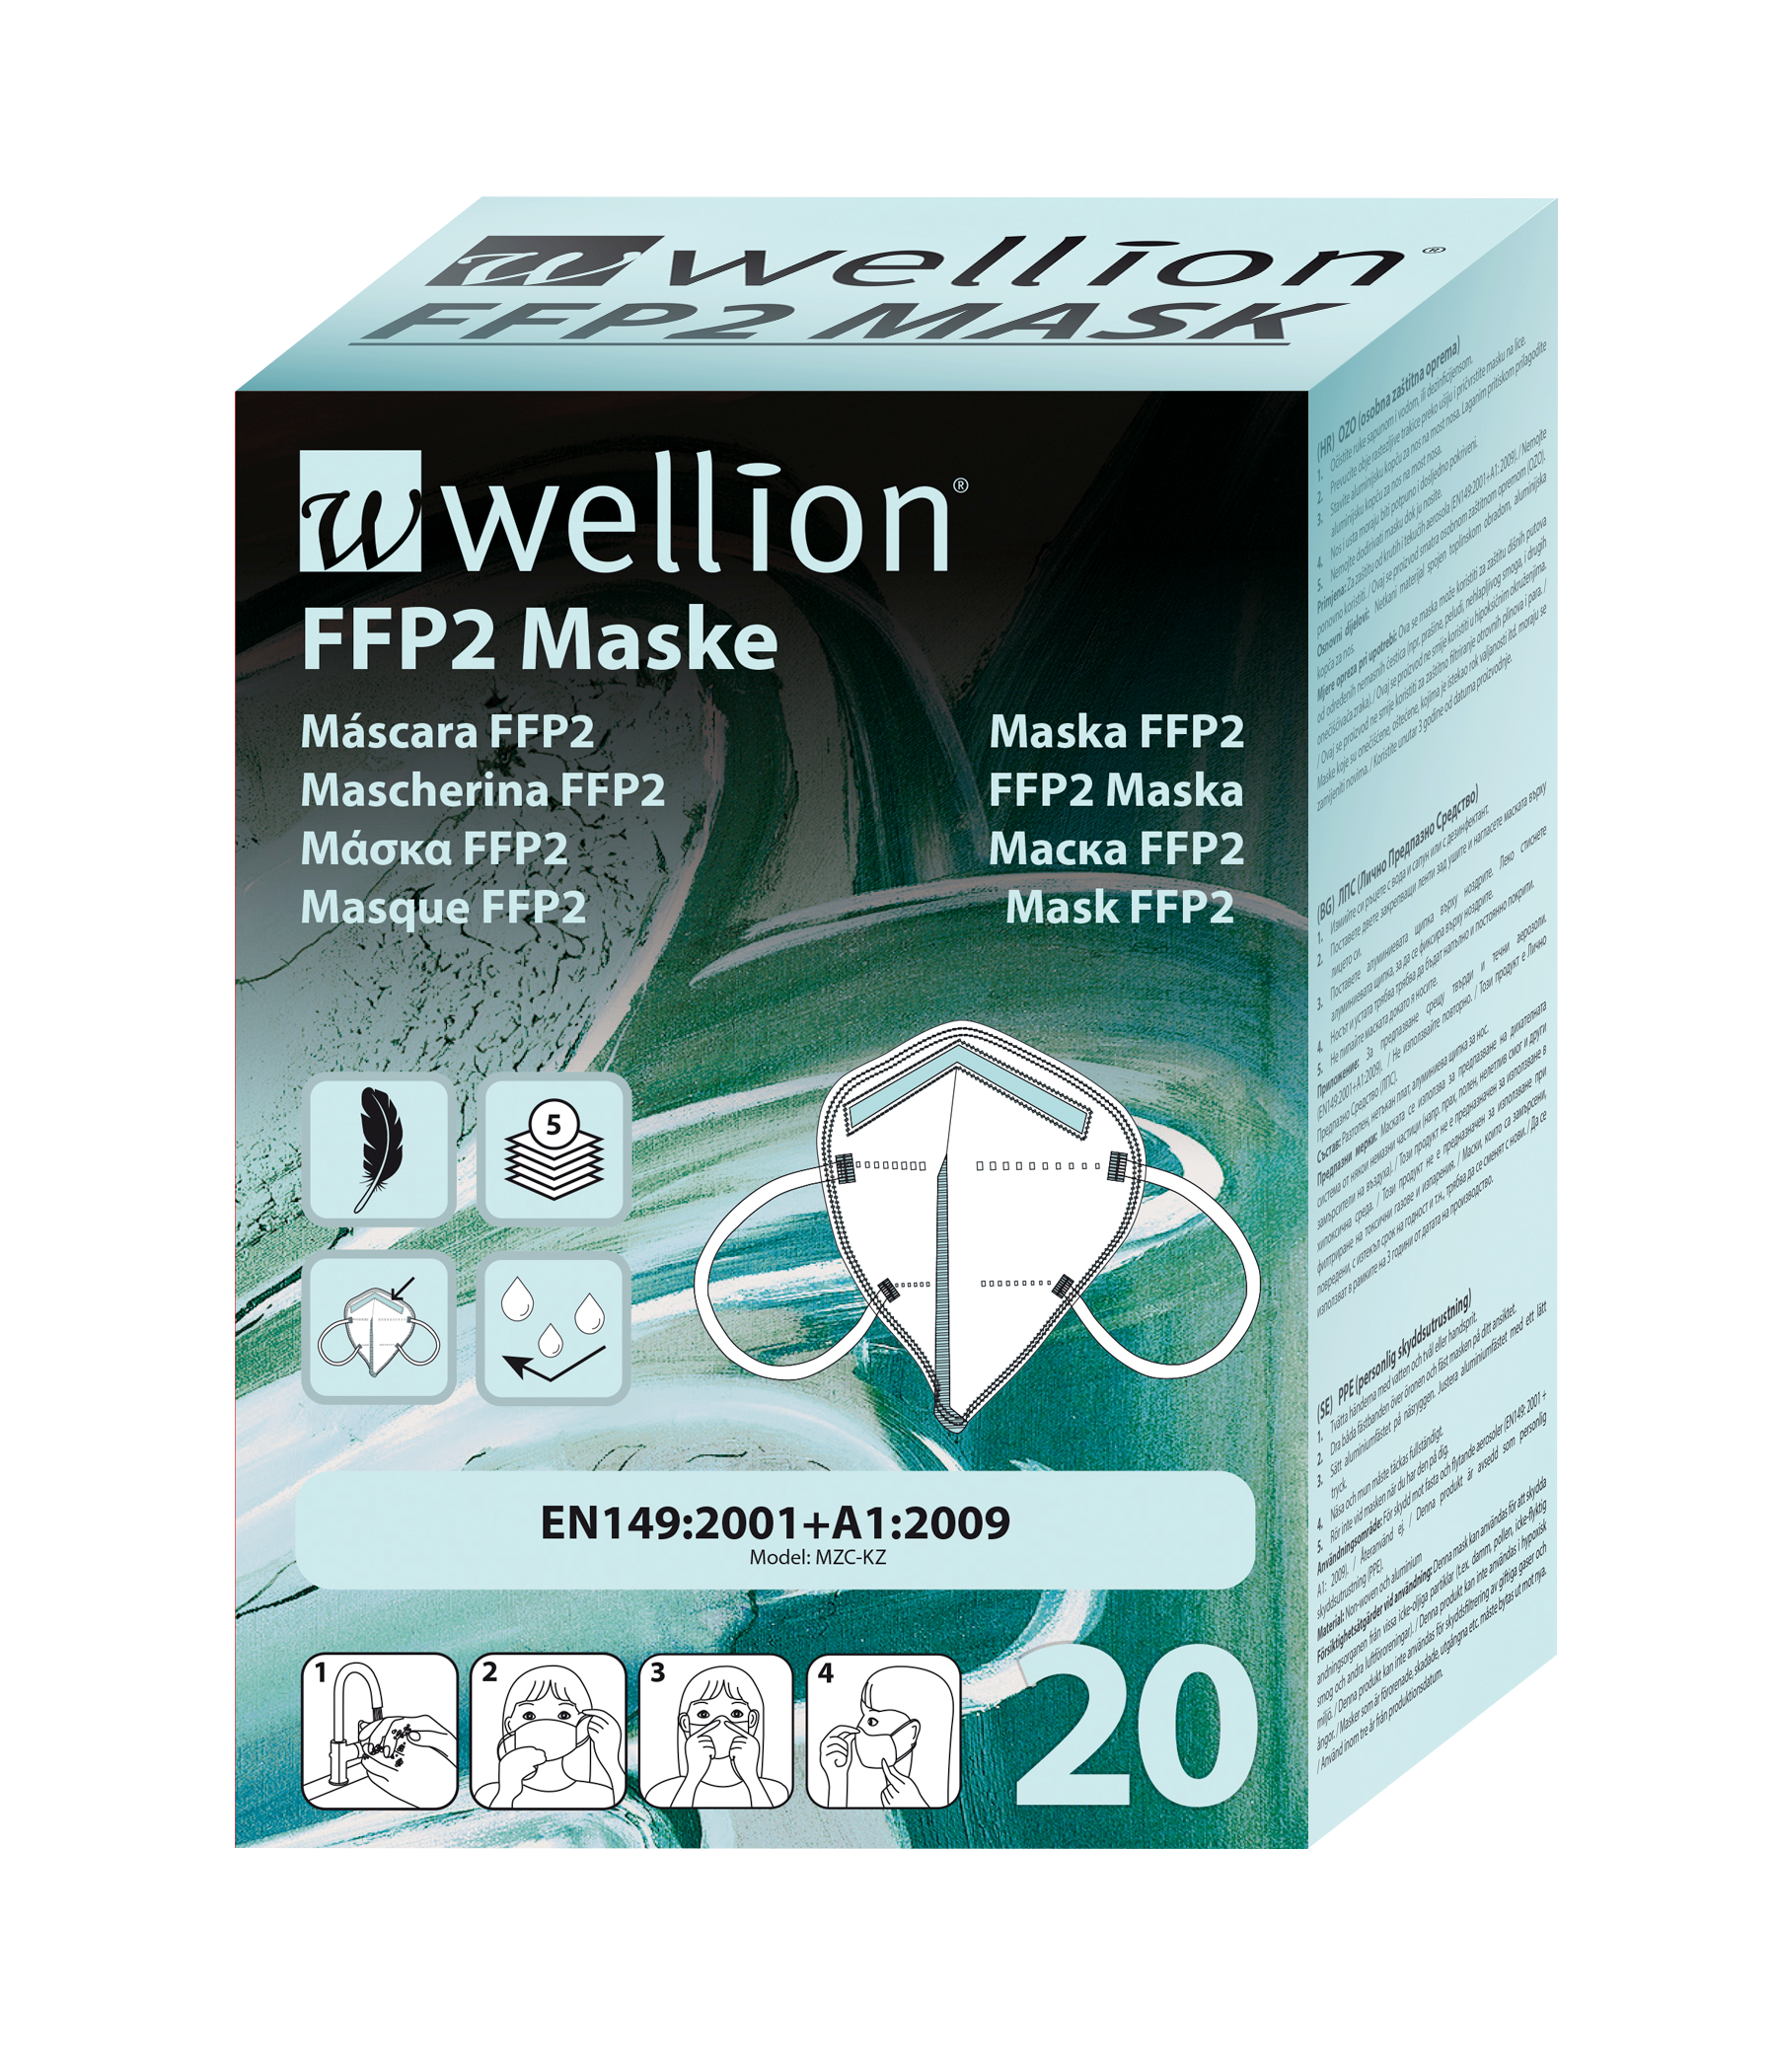 WELLMASK003 Wellion FFP2 Maske (20Stk pro Packung)